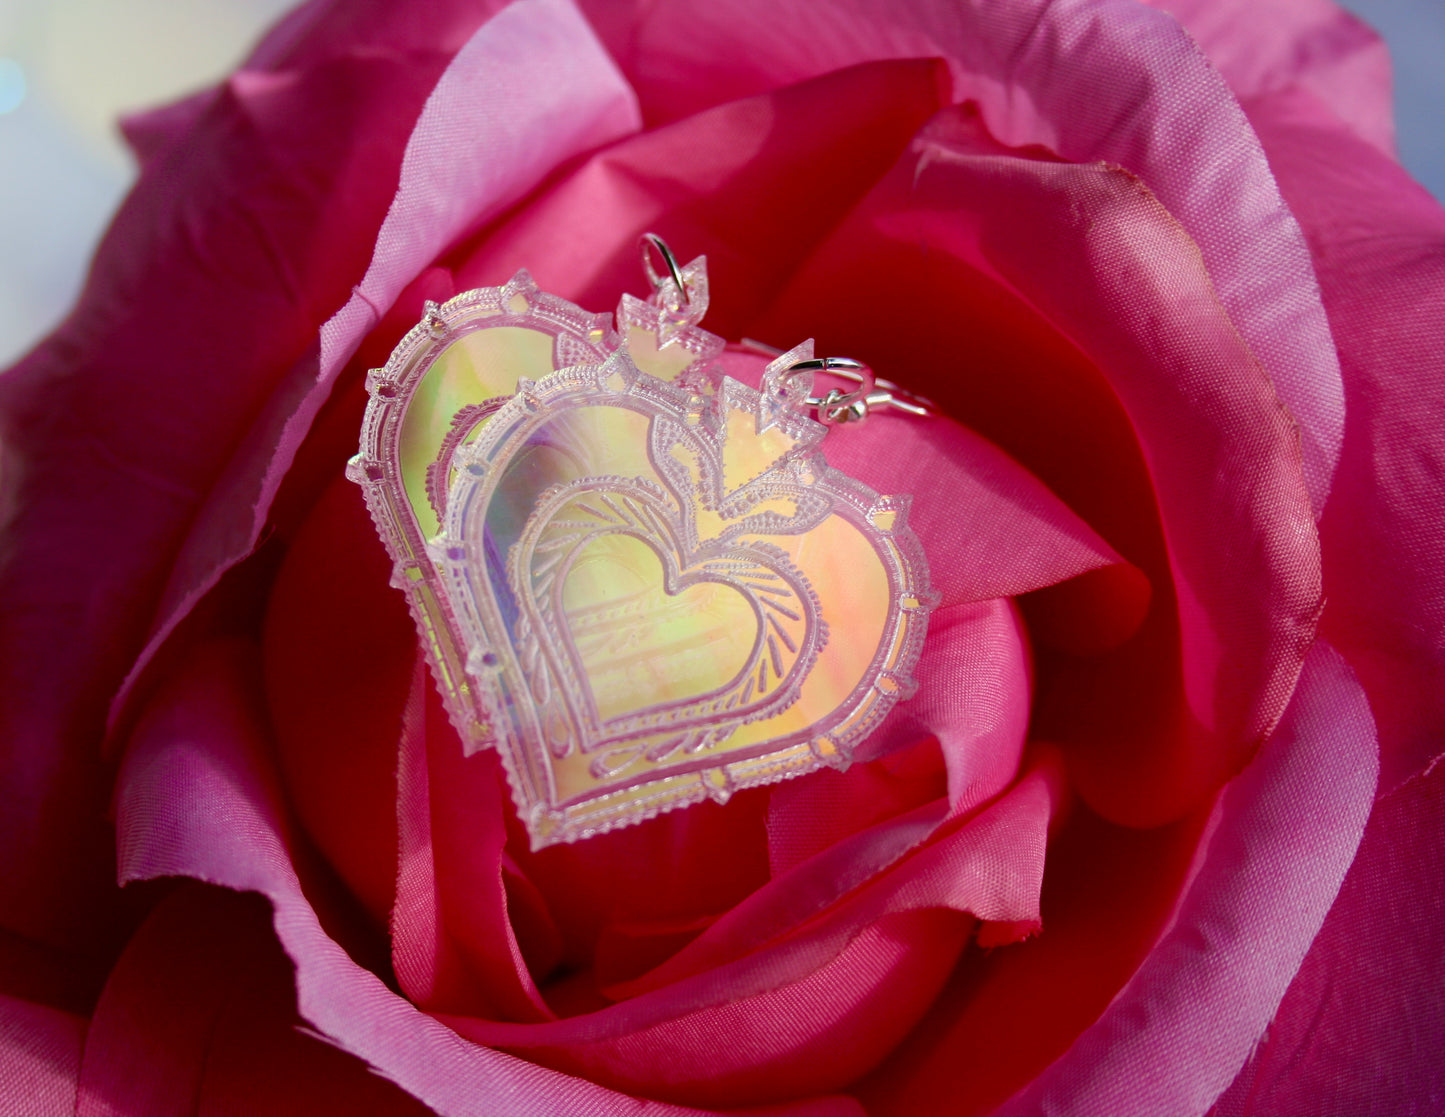 Catholic Milagros Tarot Witchy Pagan Dark Heart Shaped Romantic Occult Reflective Iridescent Ornate Decorative Acrylic Lasercut Earrings